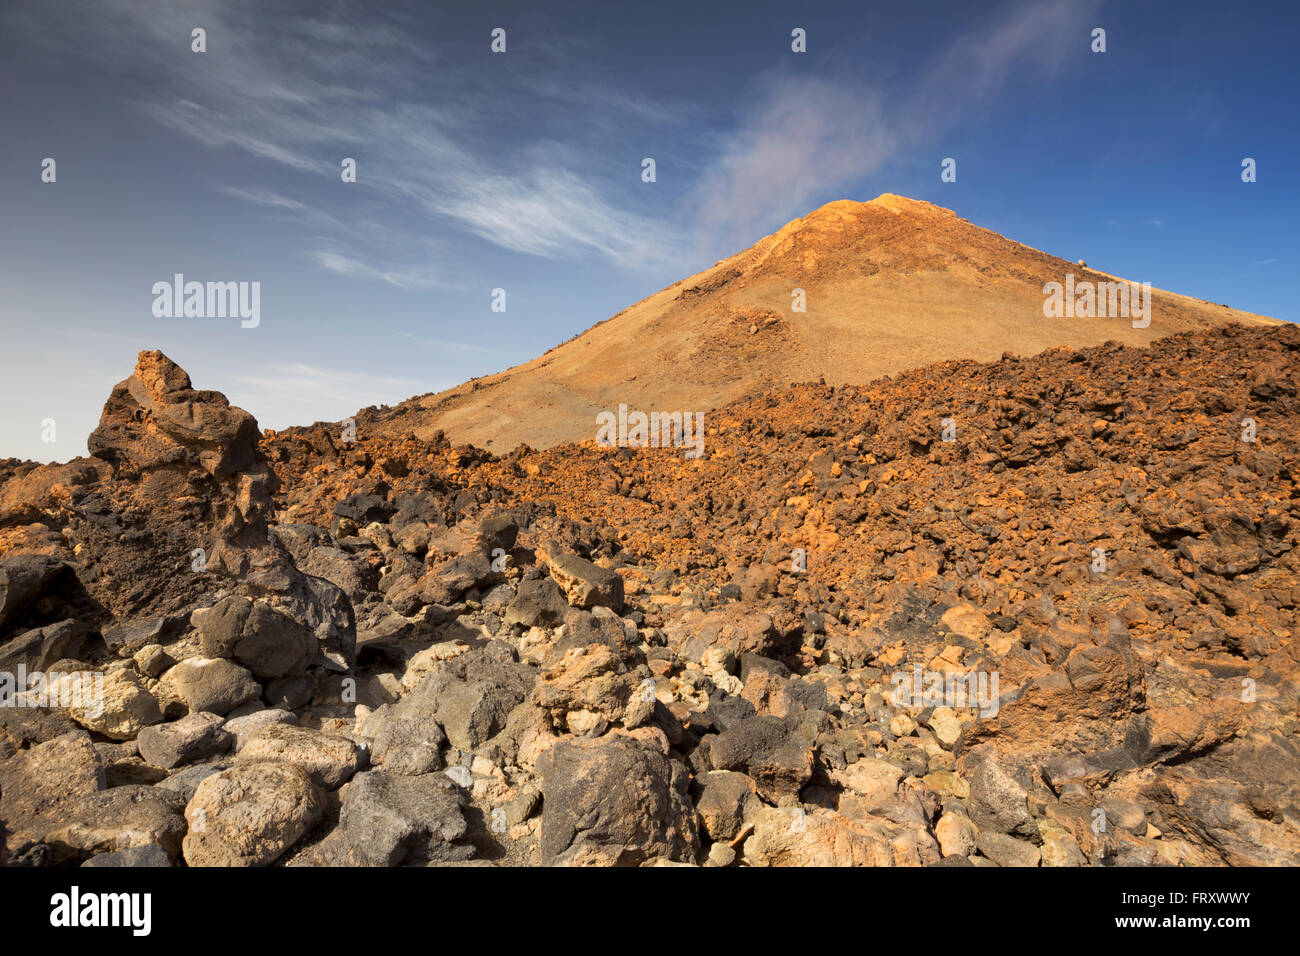 Volcanic landscape just below the peak of Mount Teide on Tenerife, Canary Islands, Spain. Stock Photo